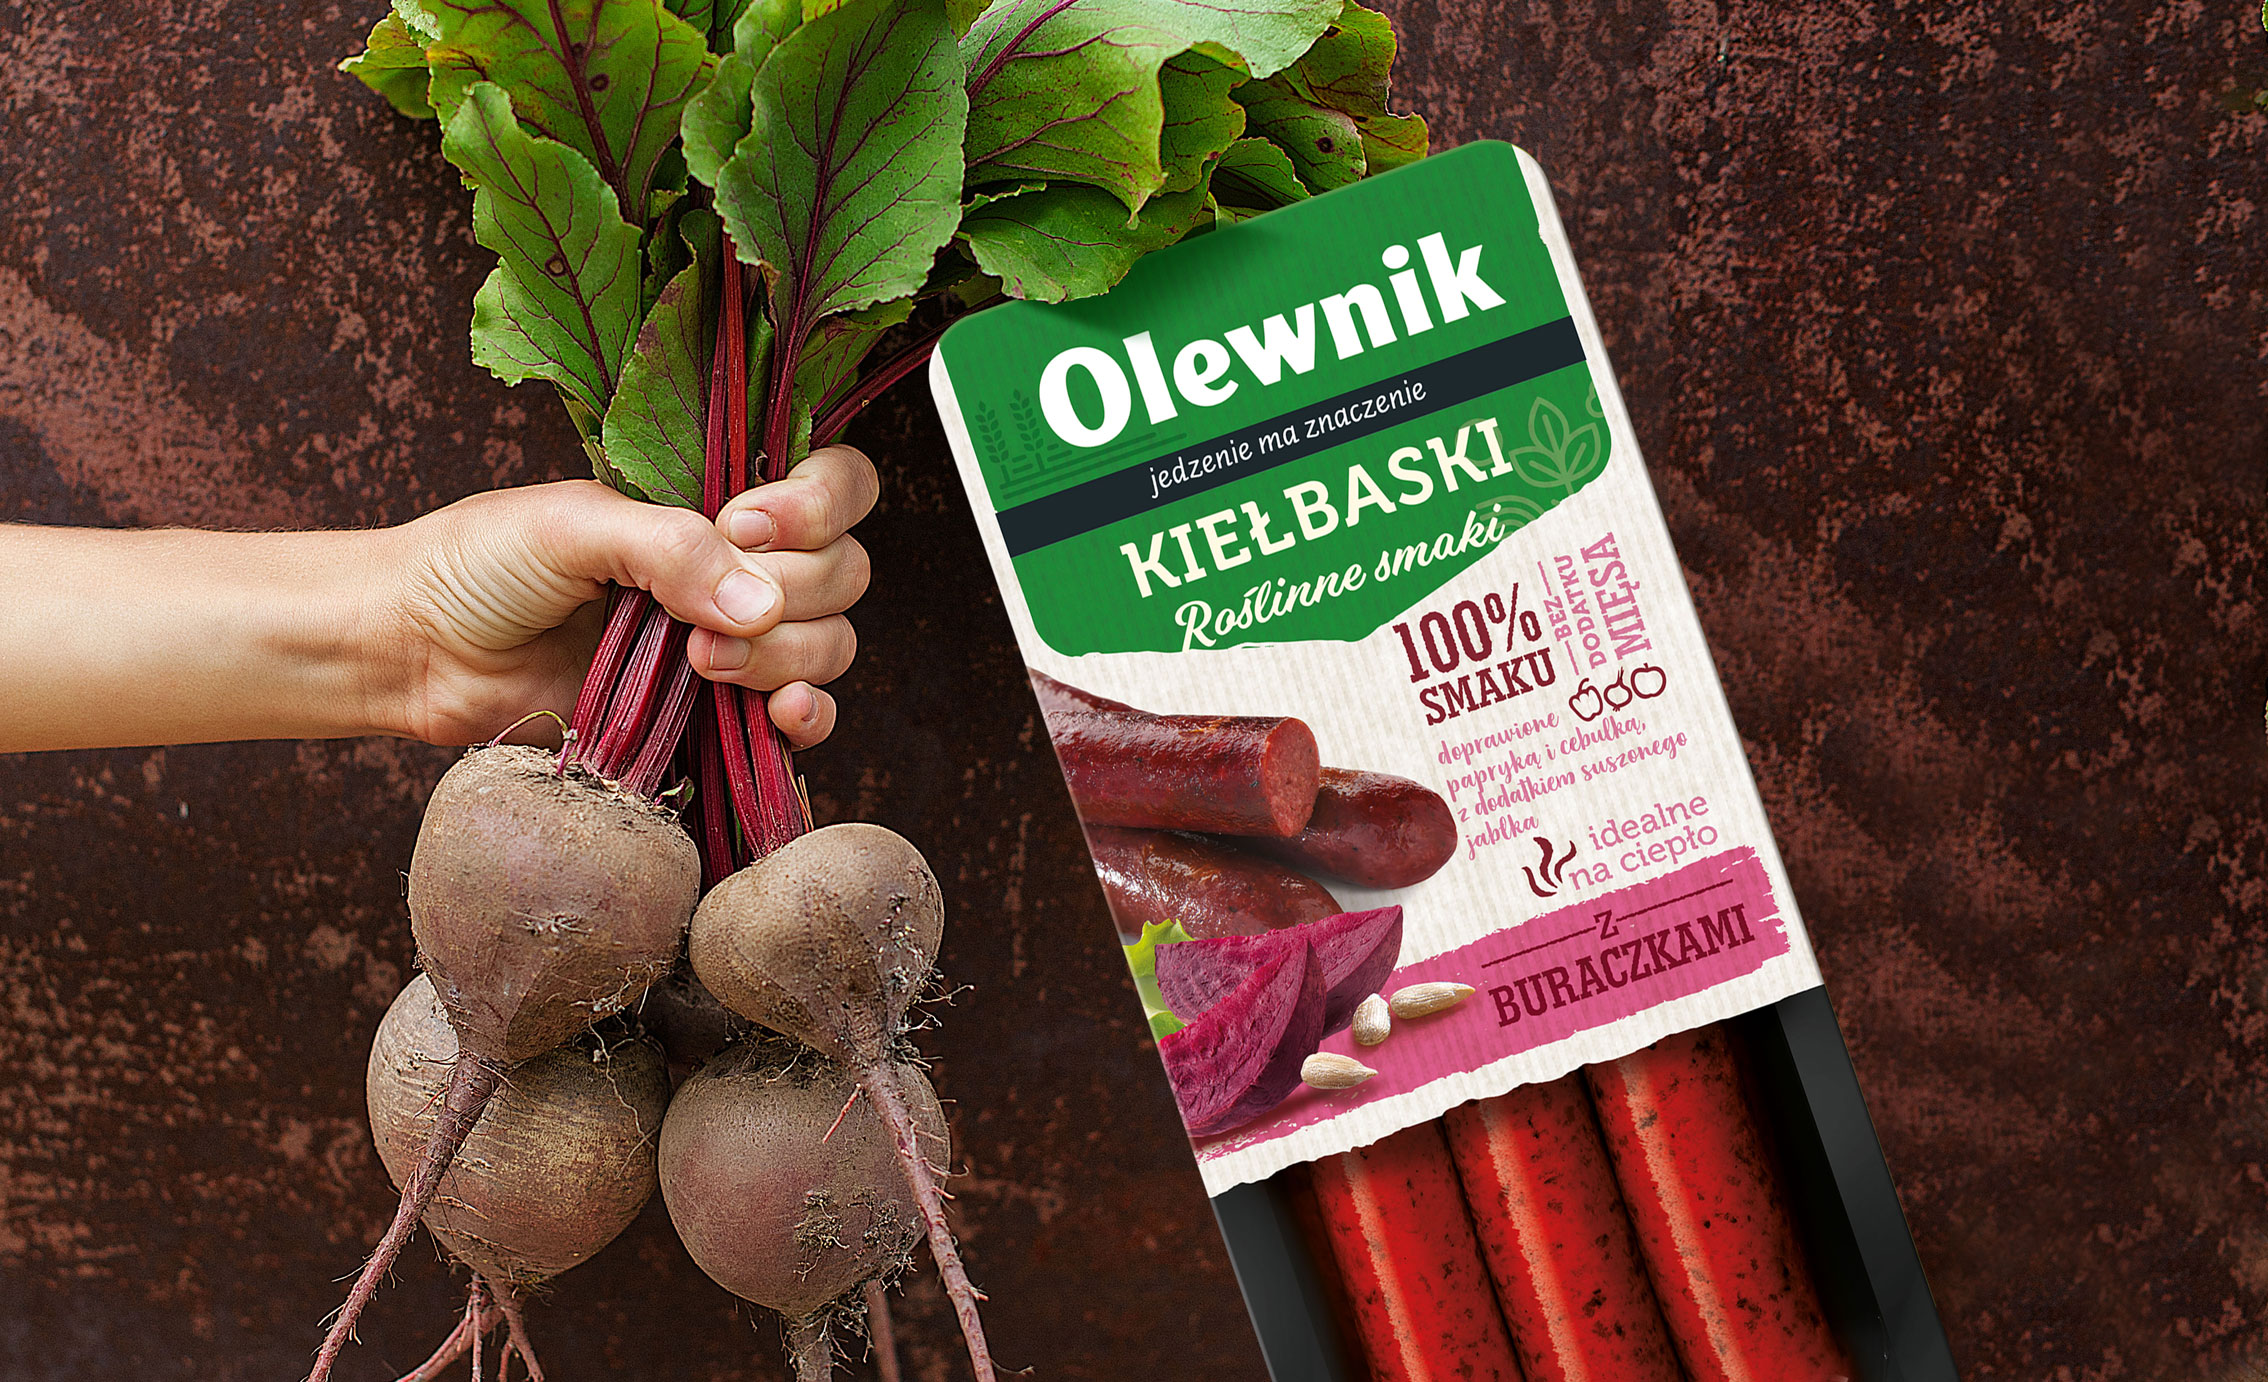 Vegetable product Olewnik - beetroot sausages